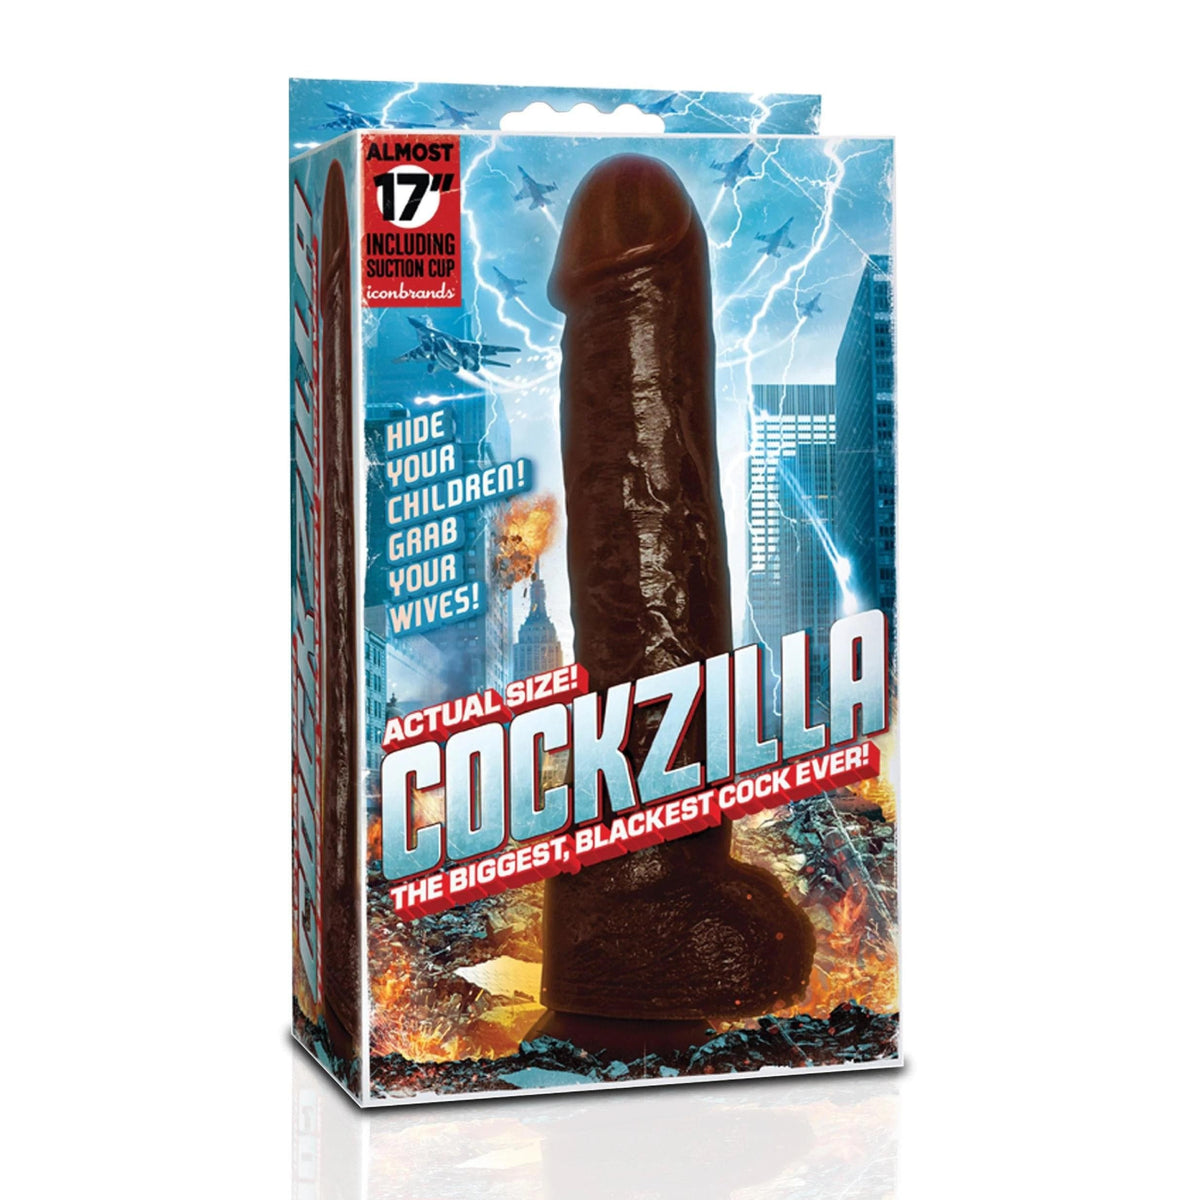 Cockzilla - Polla colosal negra realista enorme de casi 17 pulgadas